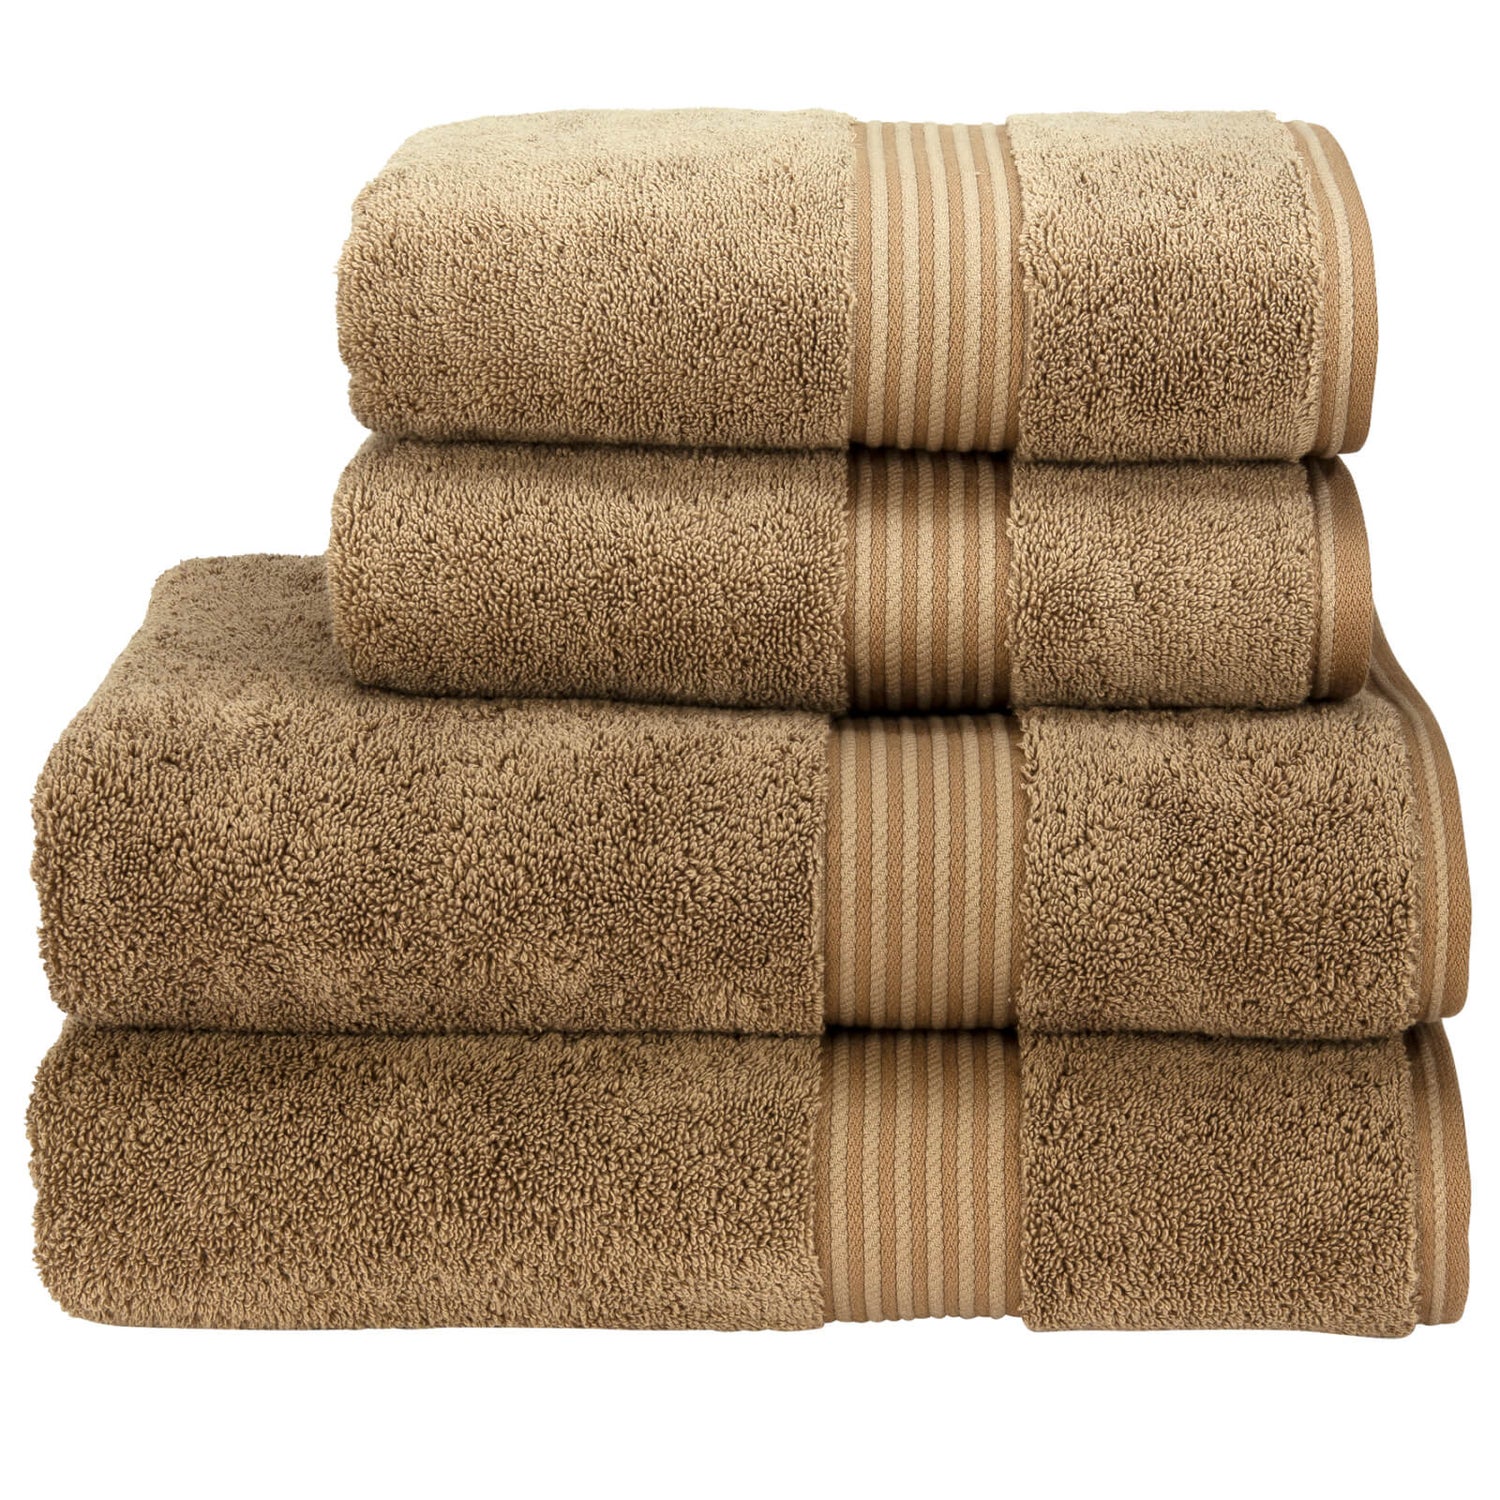 Christy Supreme Hygro Towels - Mocha - Hand Towel (Set of 2)